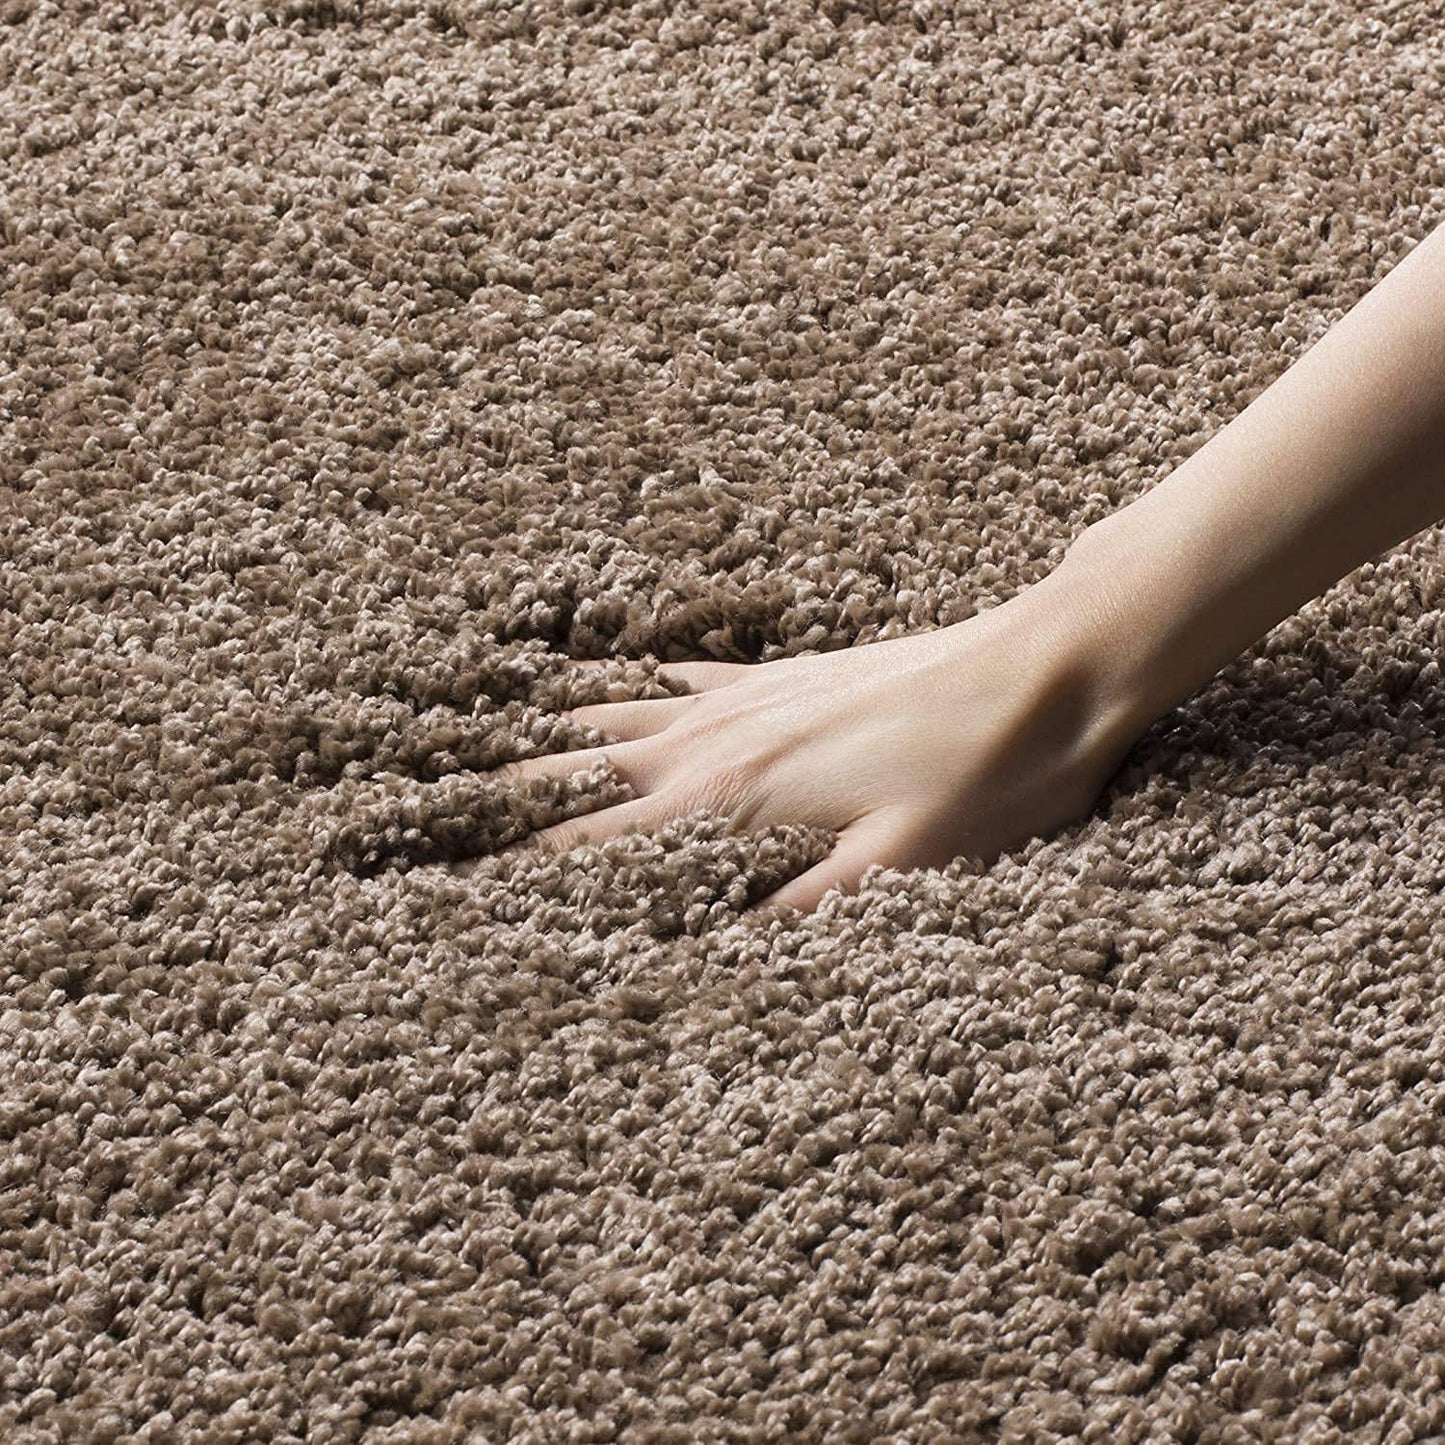 Kashyapa Rugs Collection- Plain Beige Colour Soft Microfiber Round Carpet.